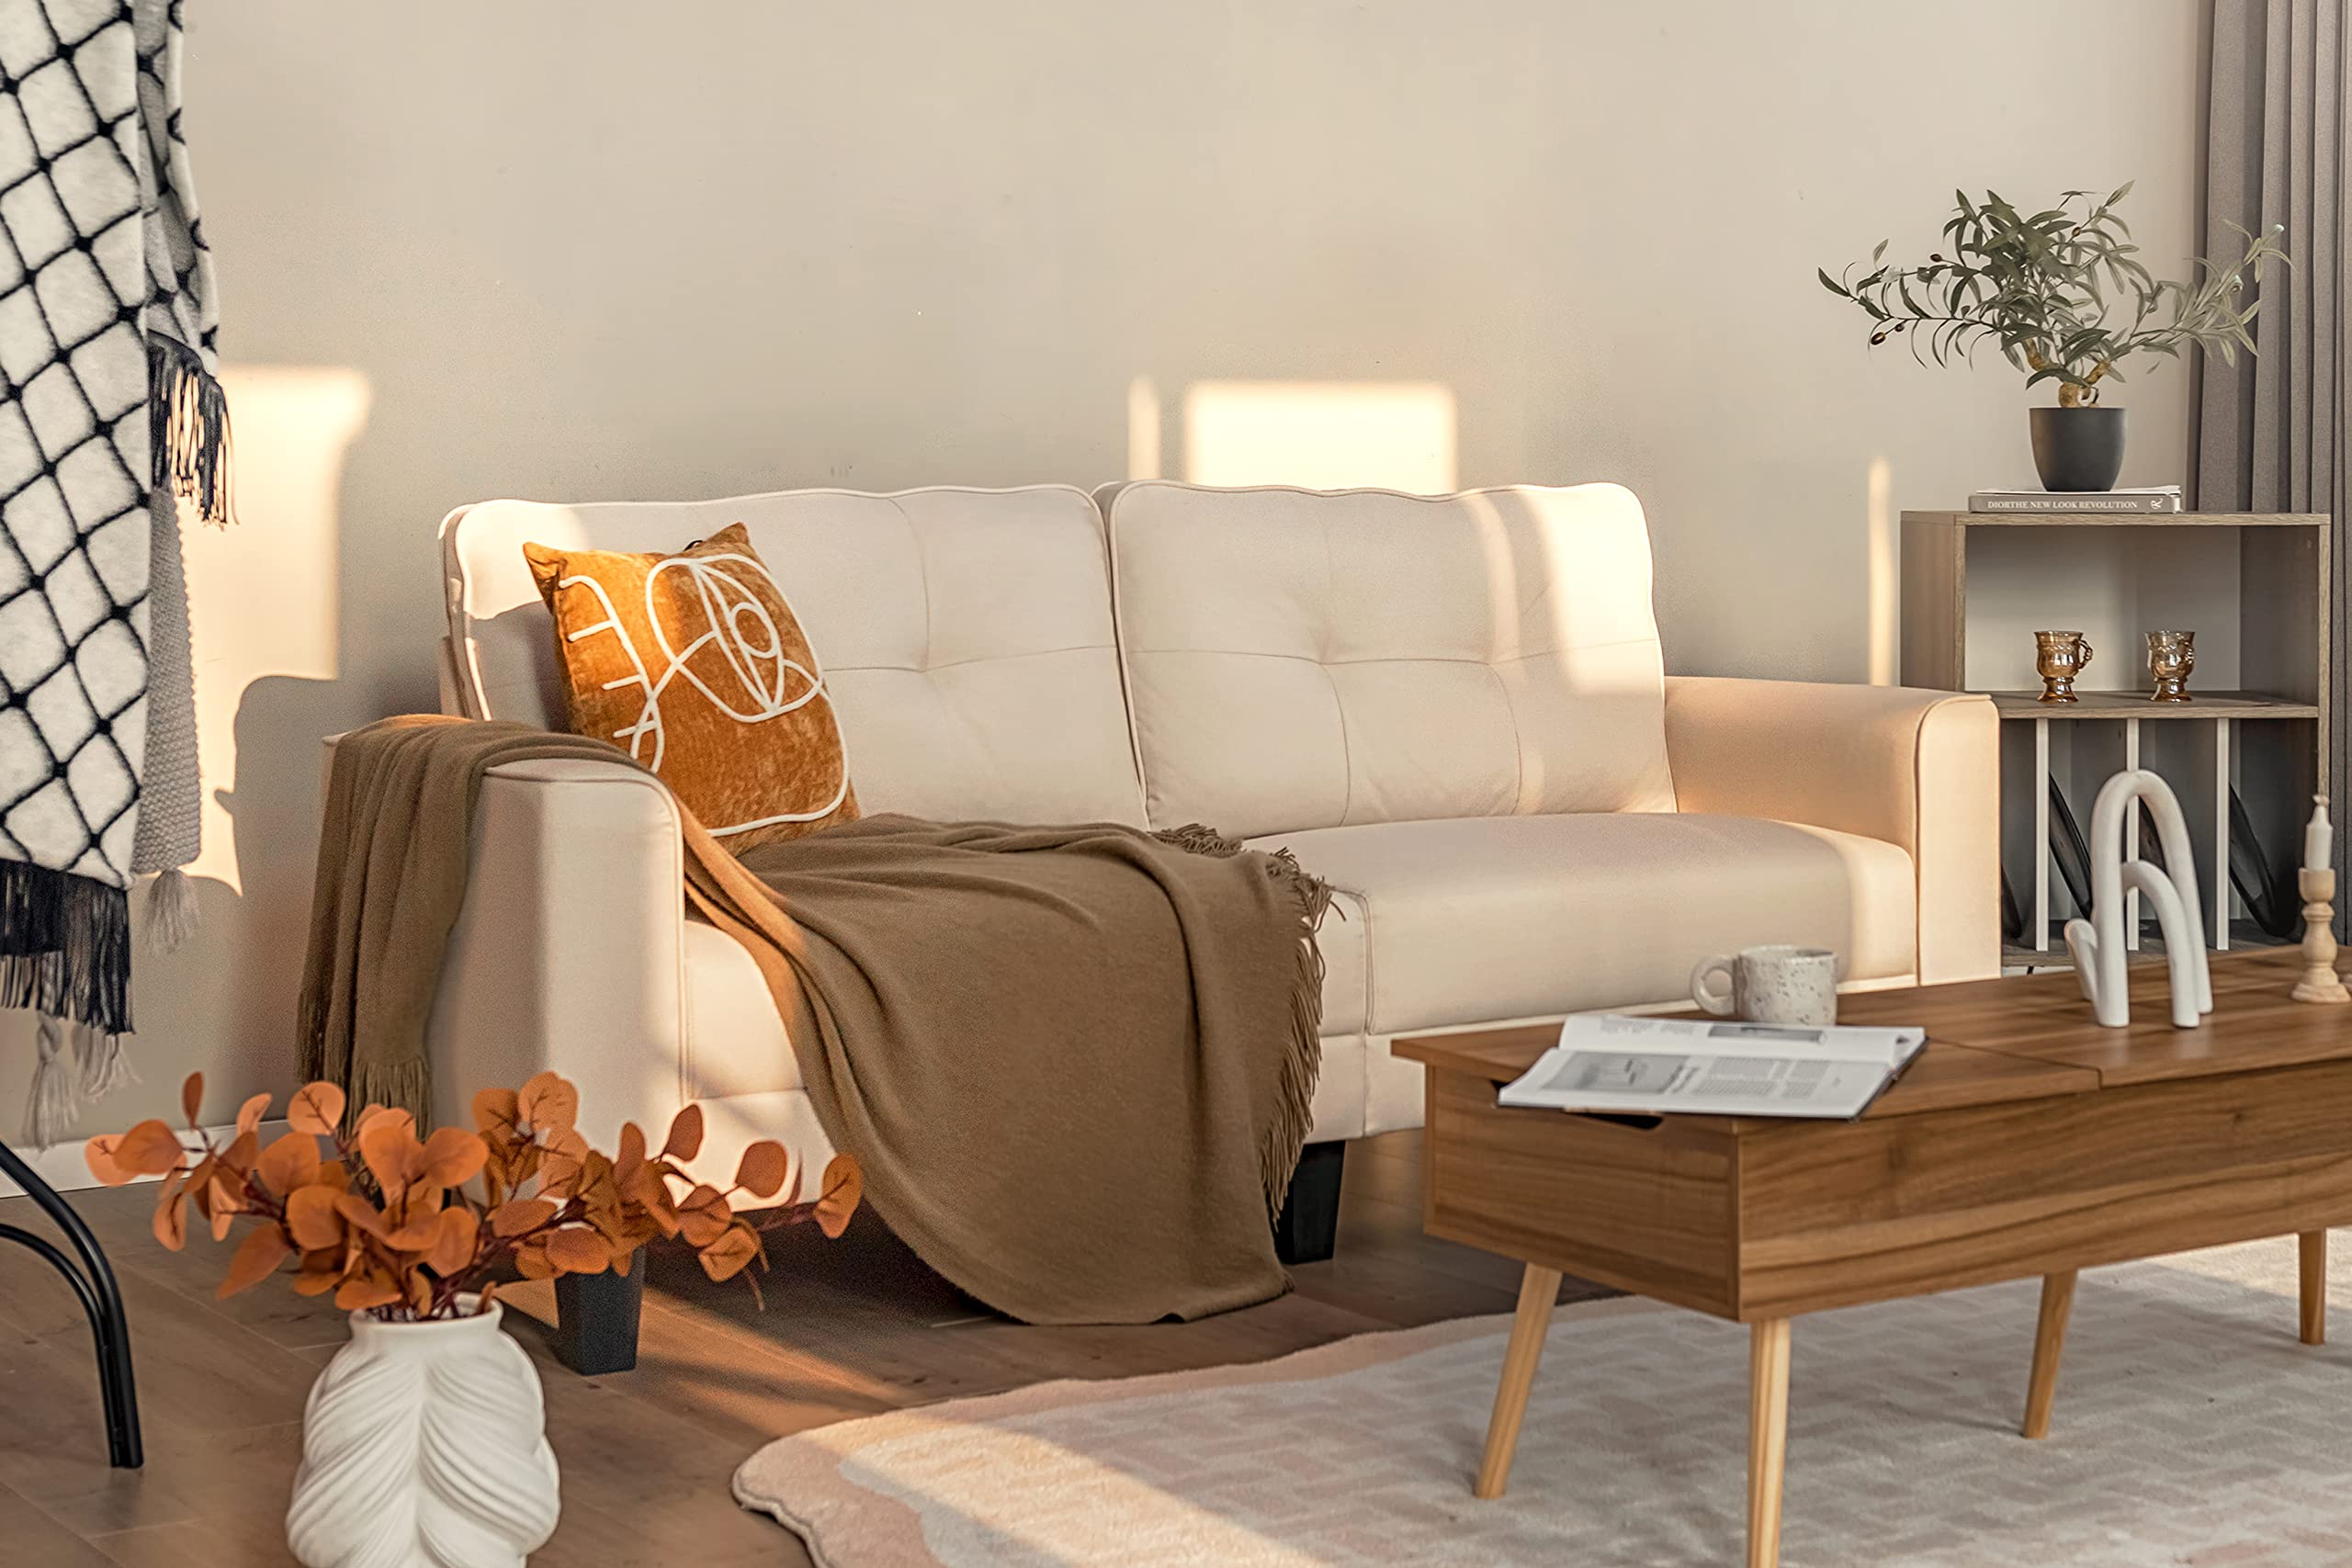 Giantex Couch, 2 Seat Sleeper Sofa, Modern Loveseat for Living Room, 6 Legs(Beige)